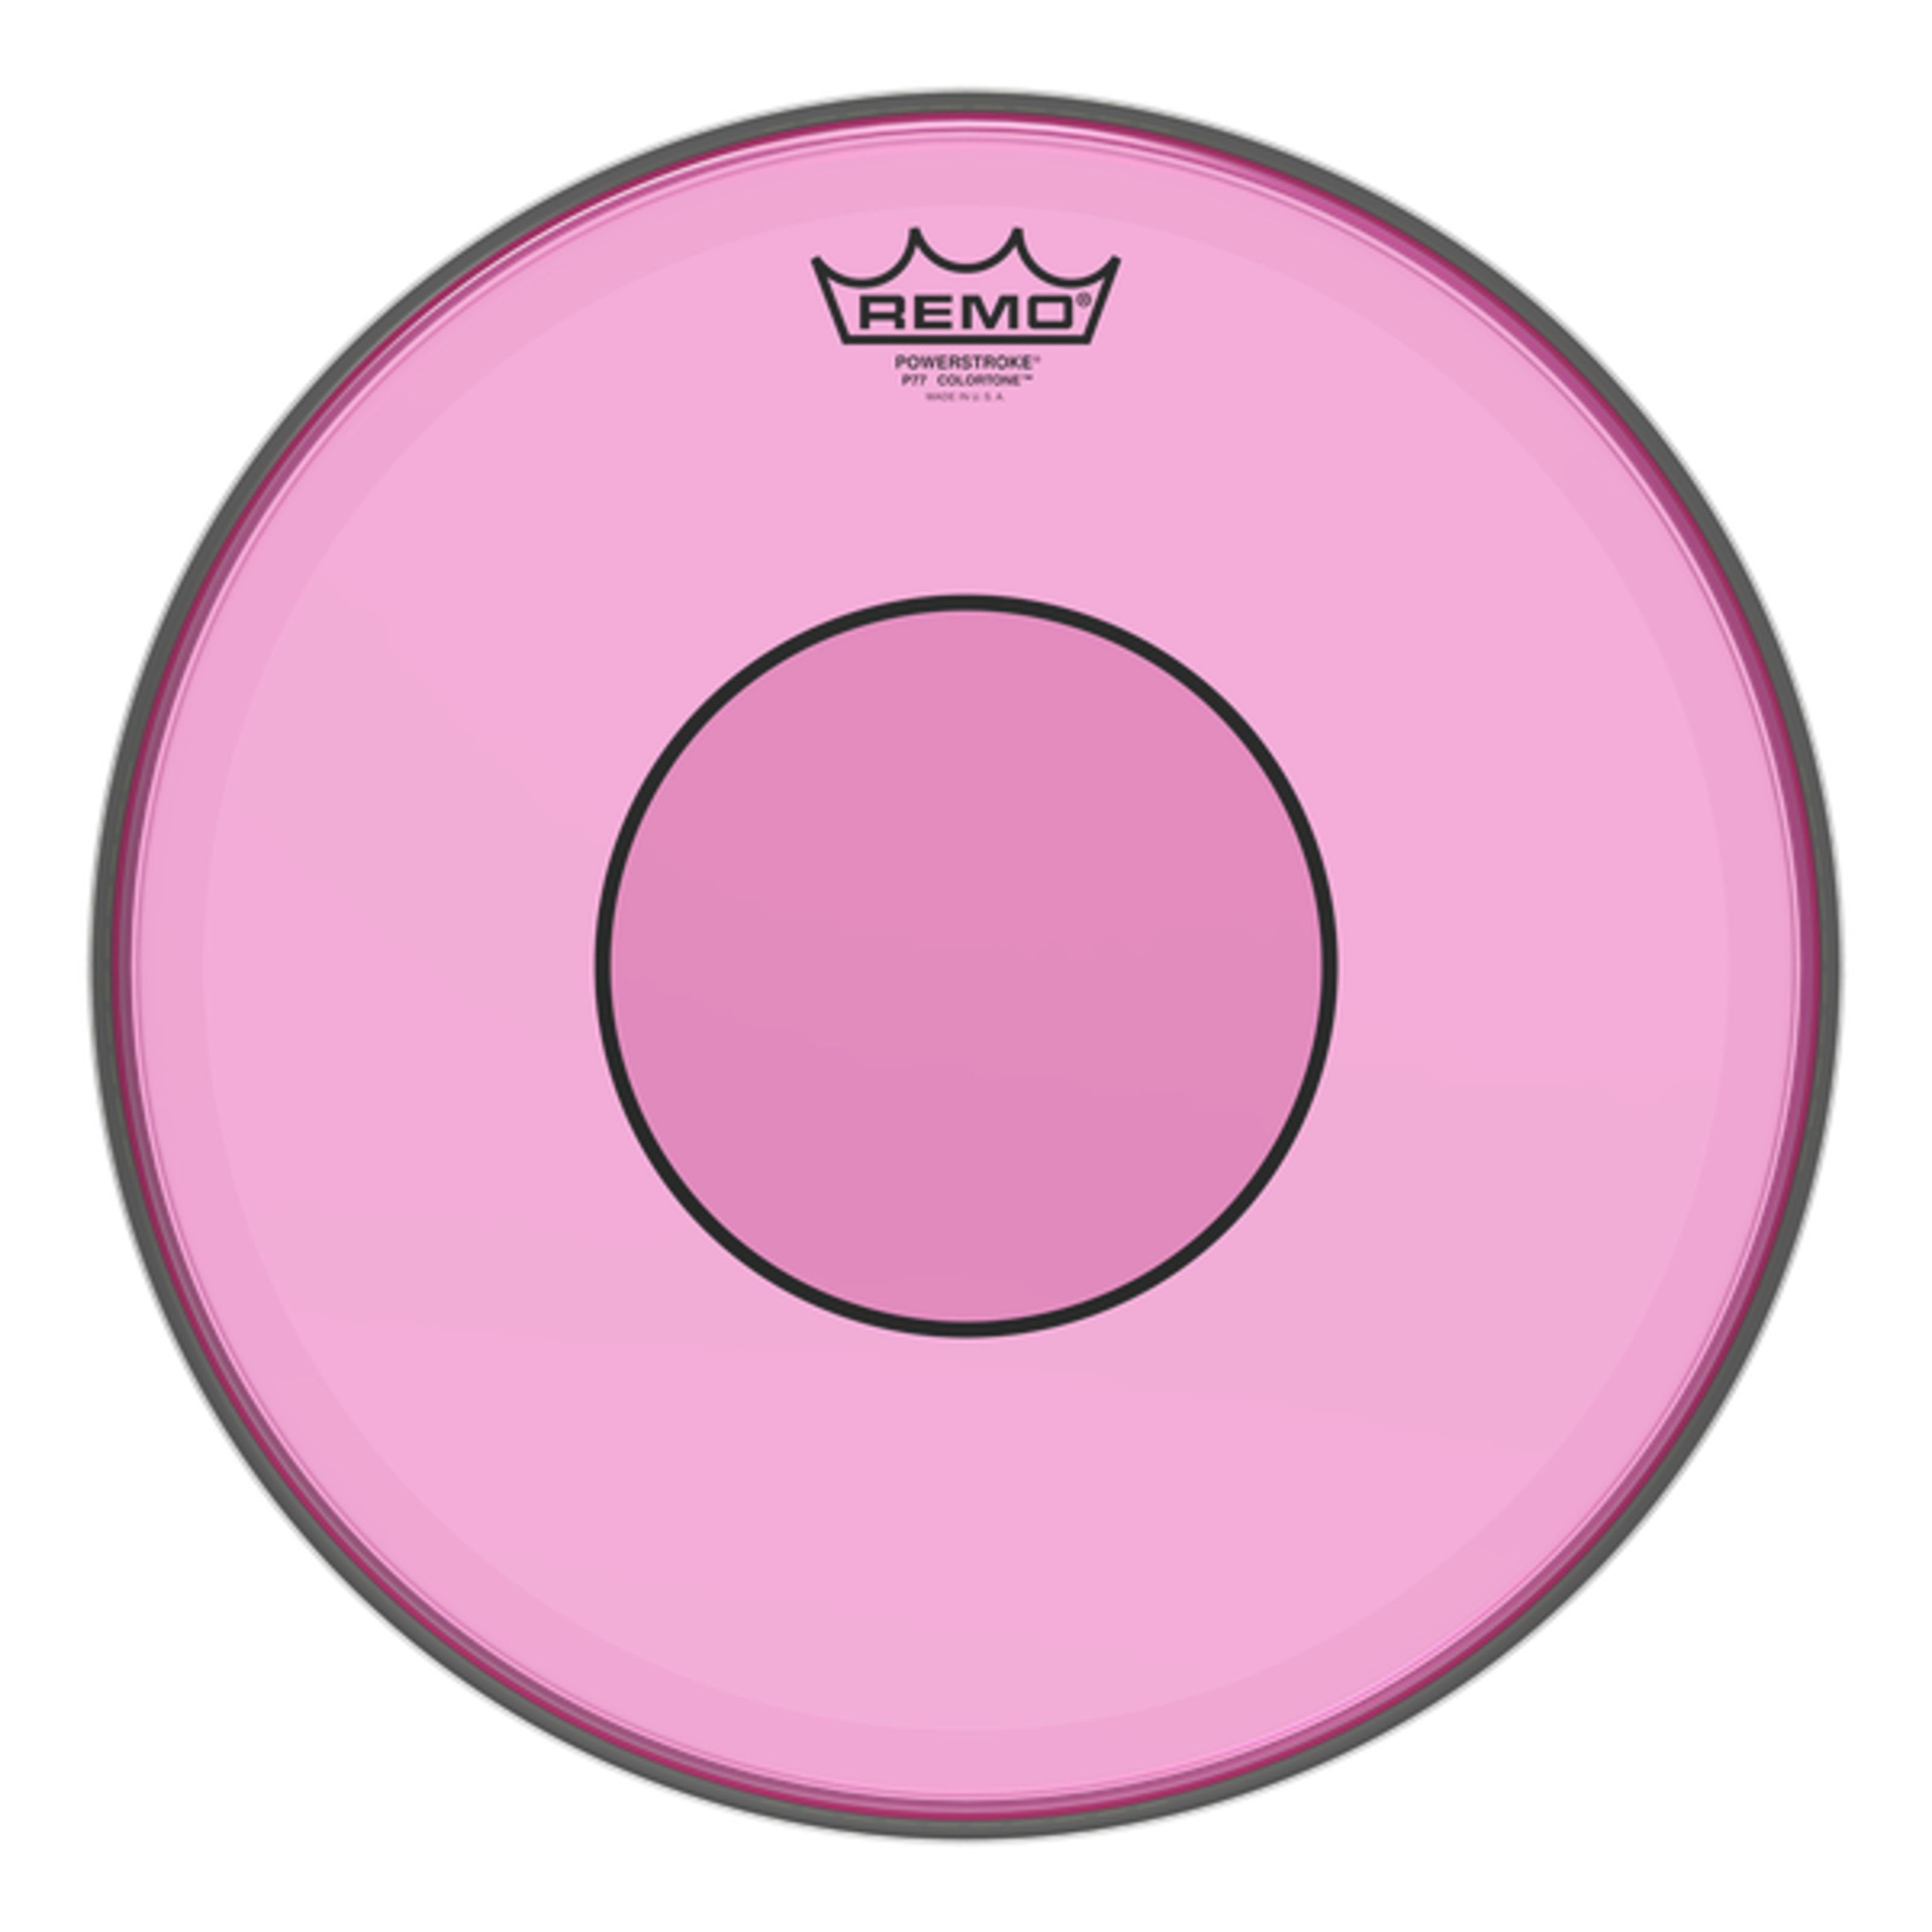 Remo Snare Drum,Powerstroke 77 Colortone 14" Pink, Felle, Snare Schlagfelle, Powerstroke 77 Colortone 14" Pink - Snare Drum Schlagfell